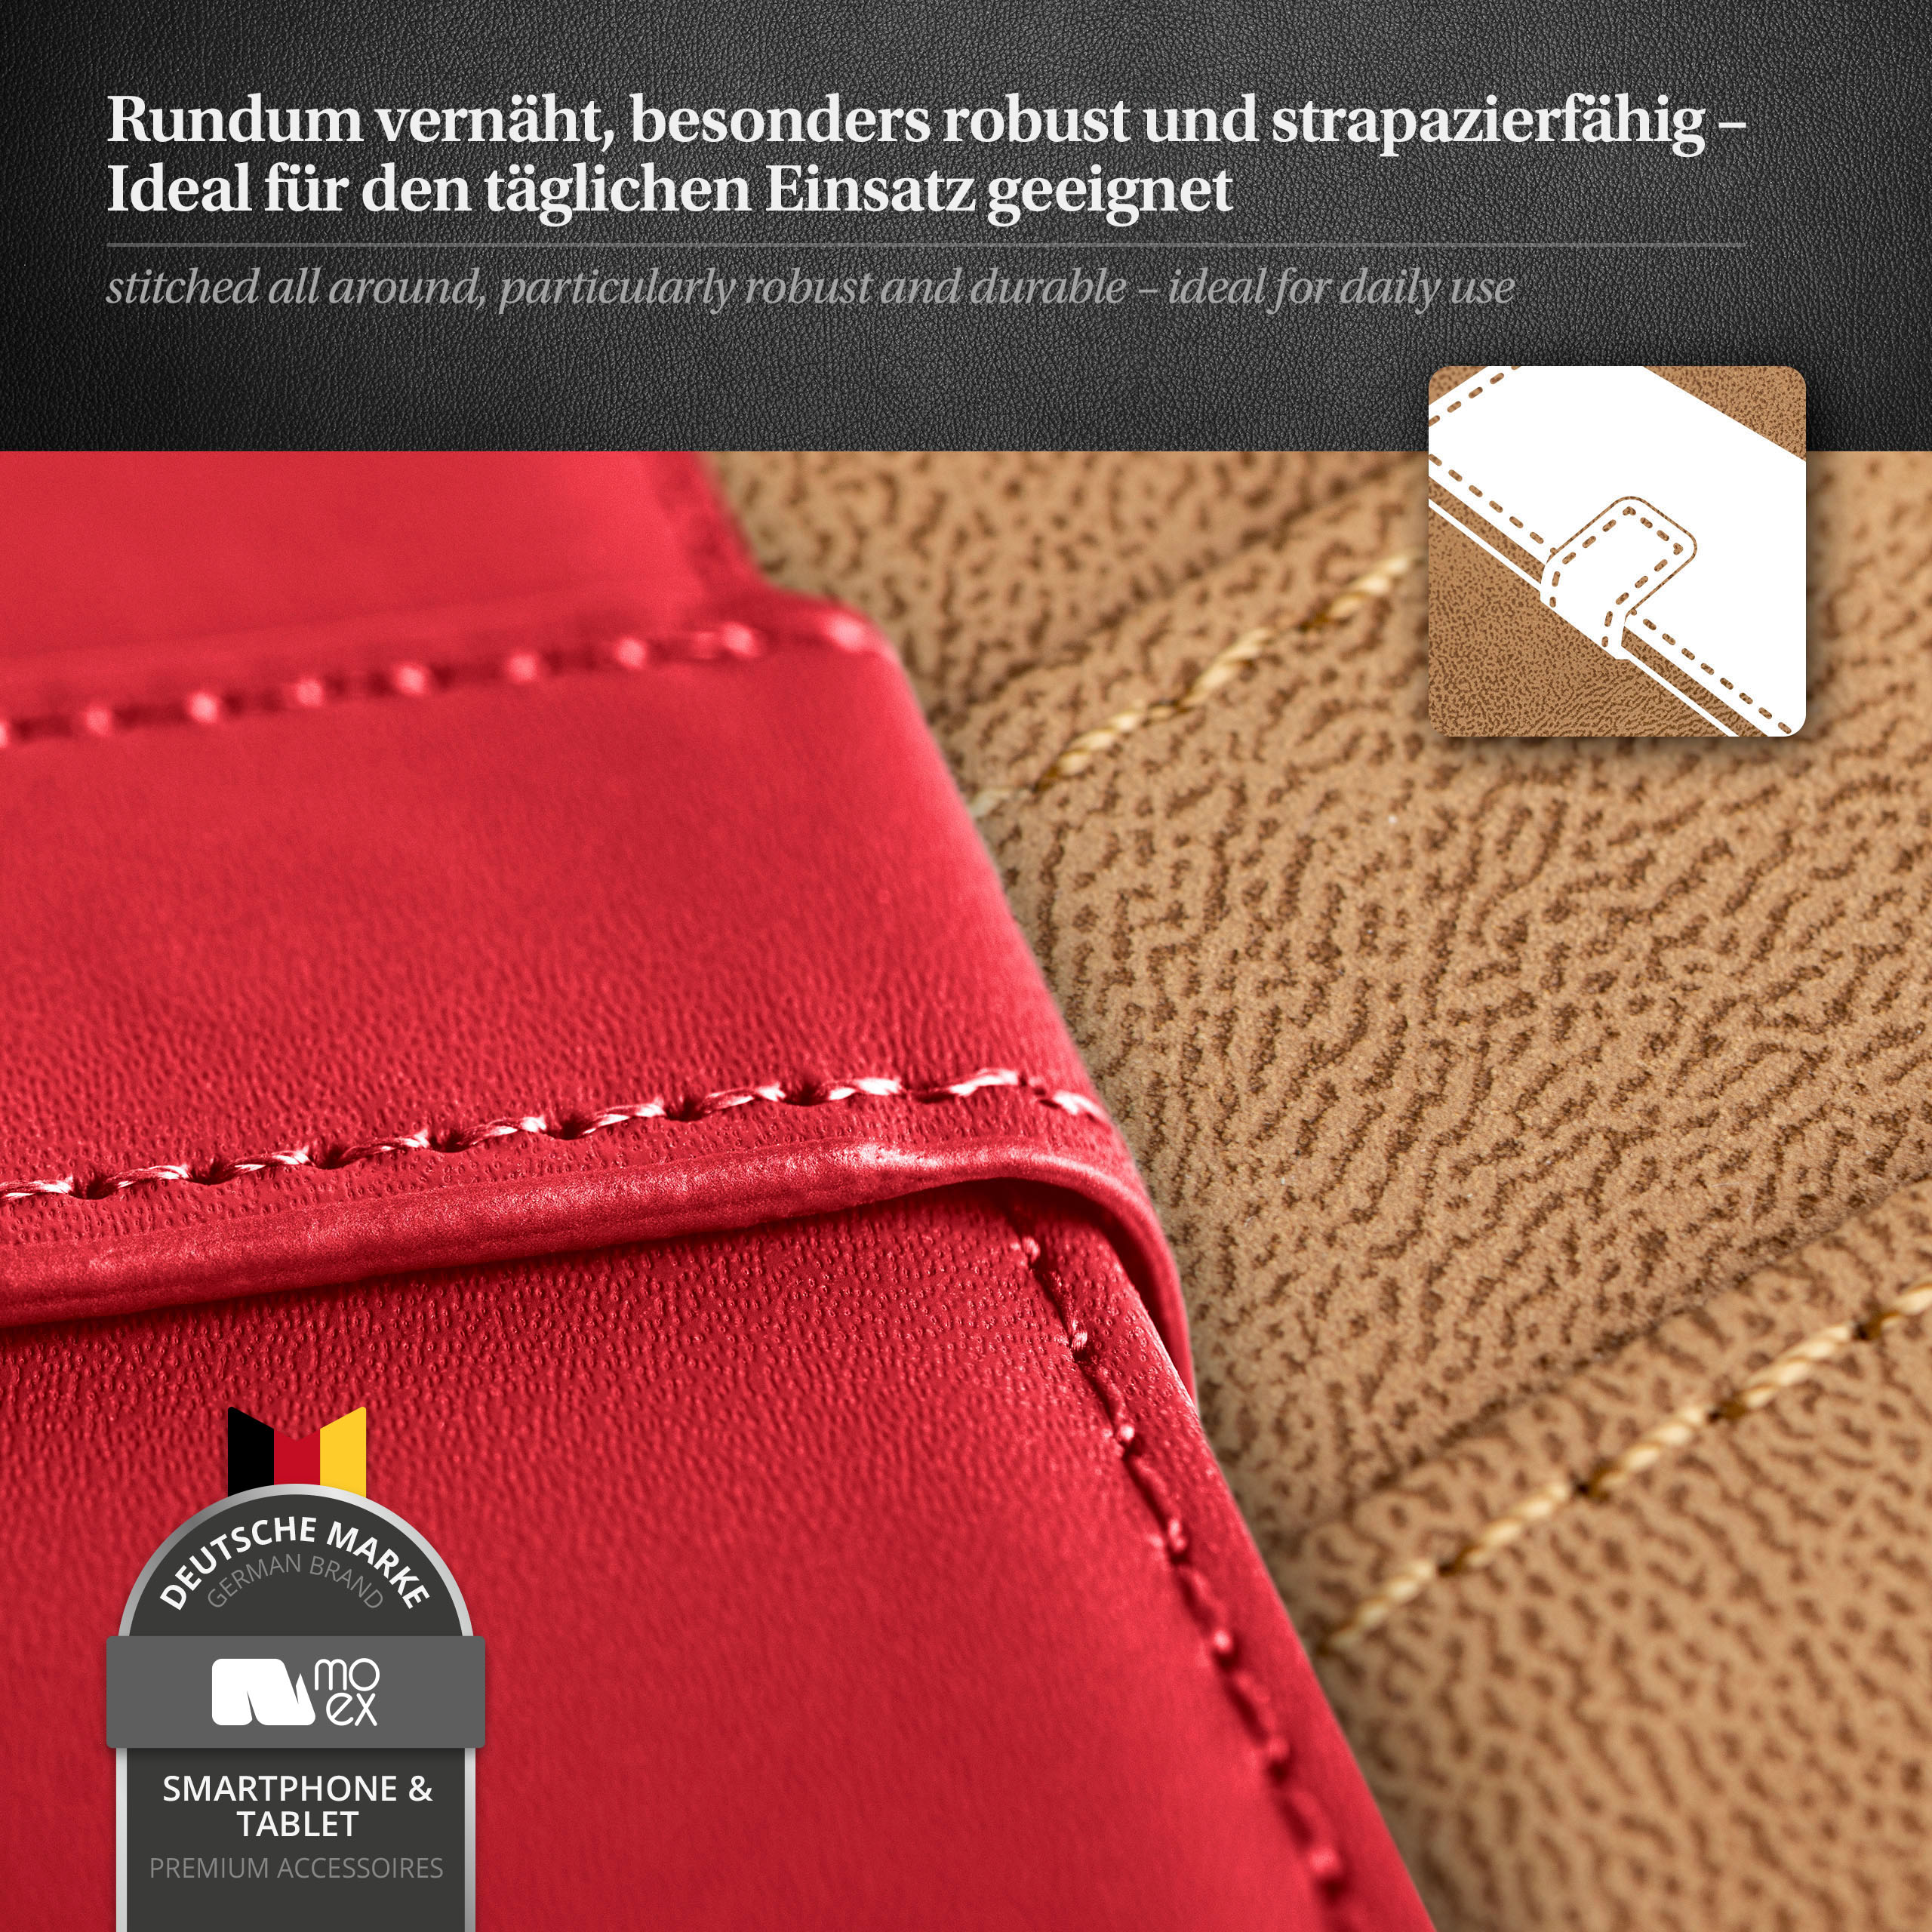 Bookcover, MOEX Blazing-Red S3 Mini, Galaxy Case, Book Samsung,